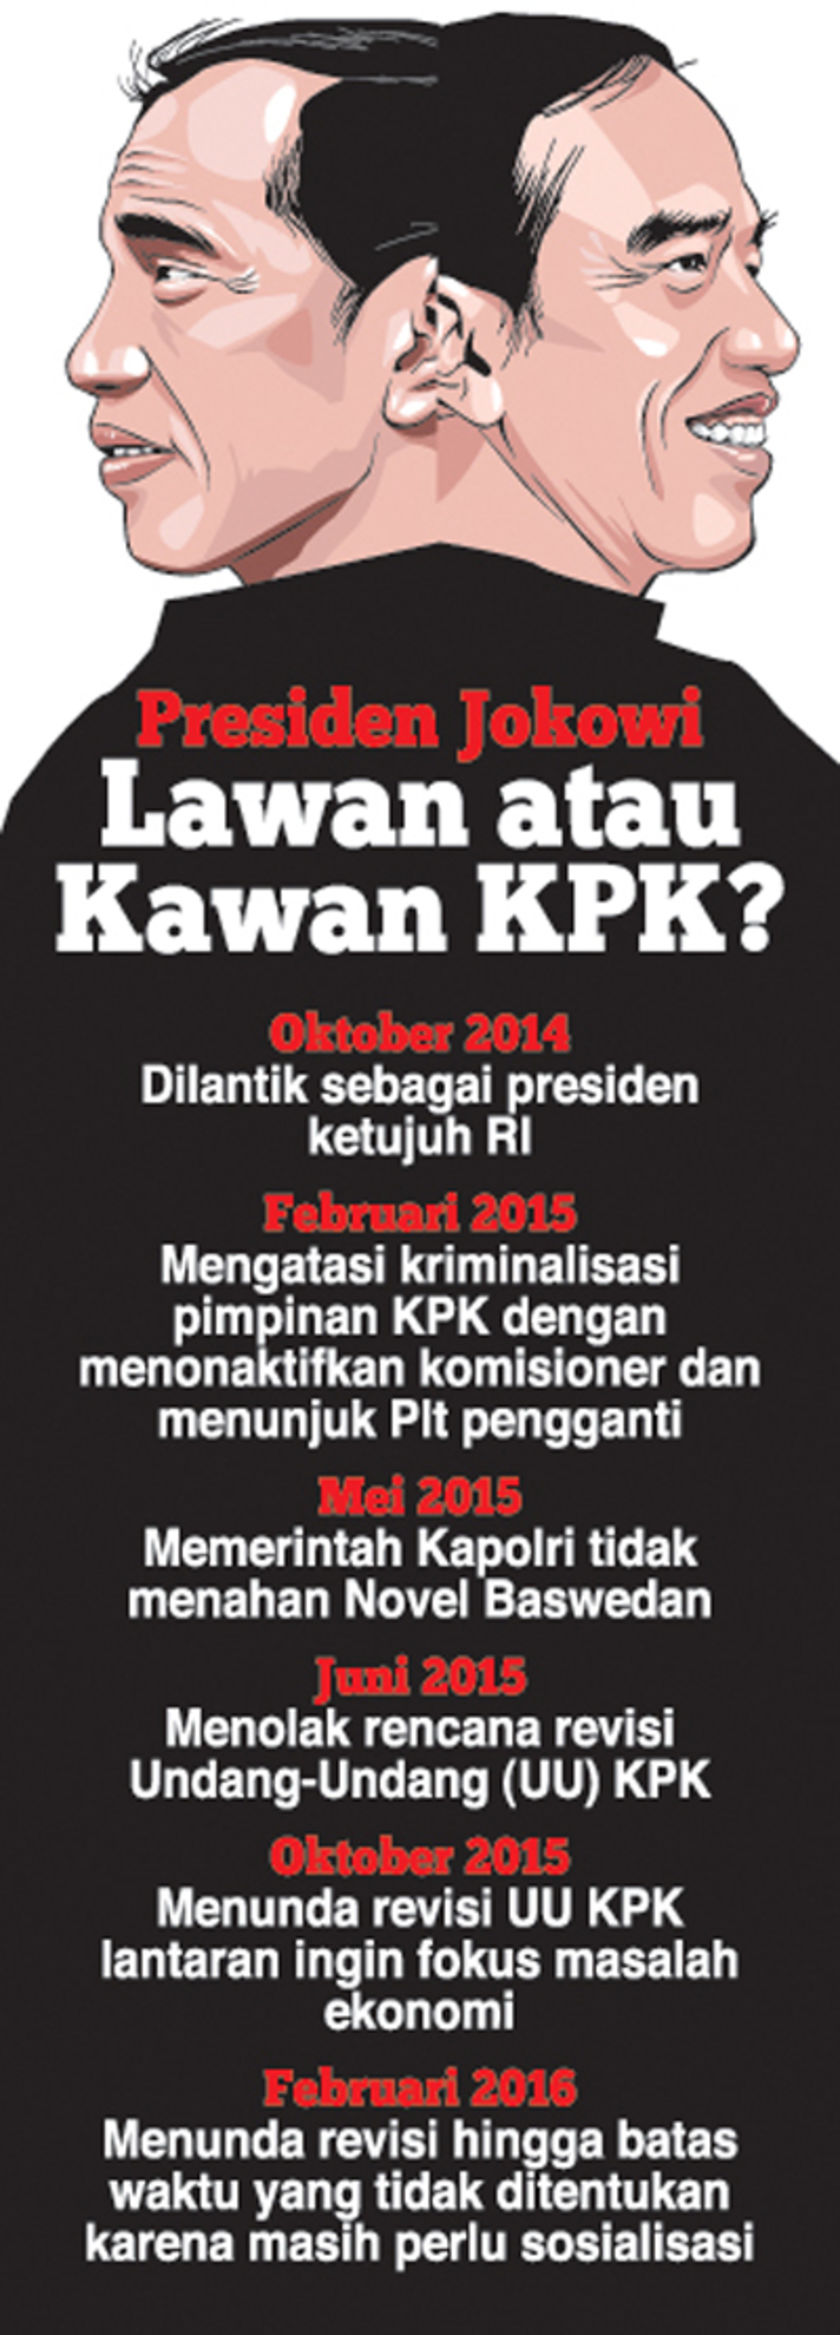 Jokowi Tunda Revisi UU KPK